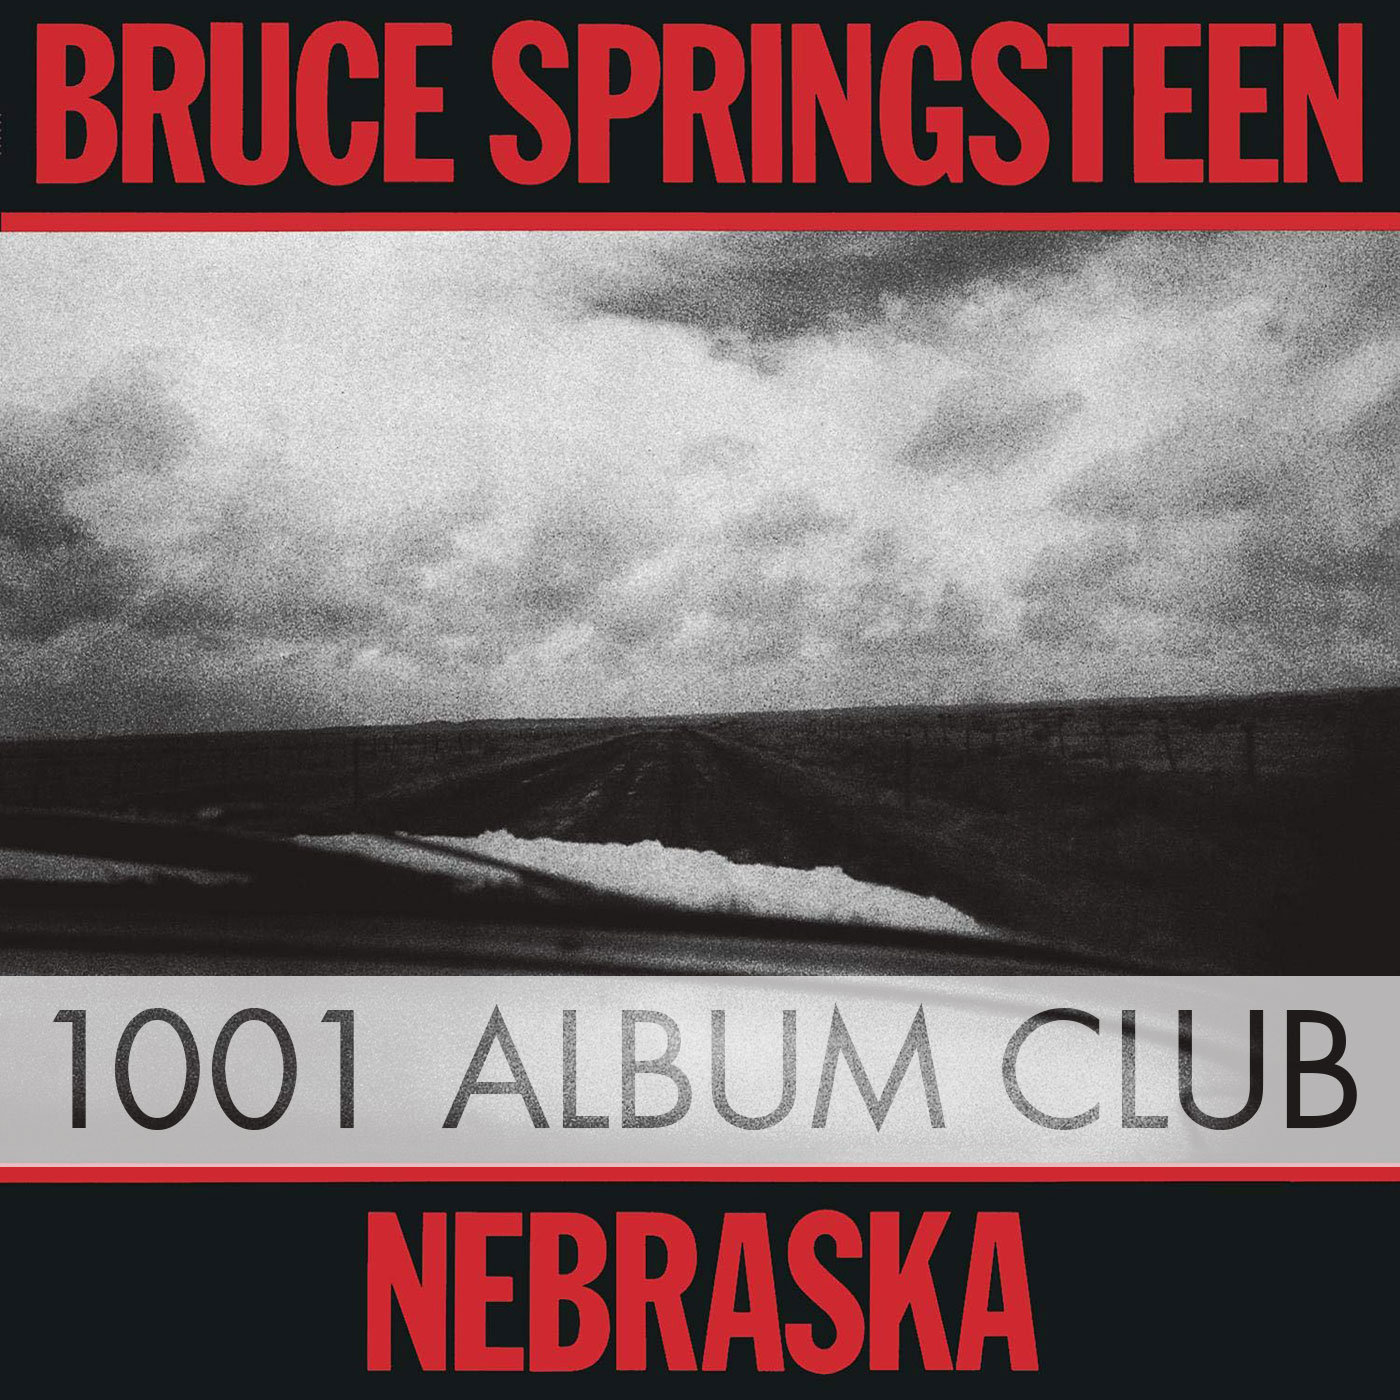 511 Bruce Springsteen – Nebraska – 1001 Album Club